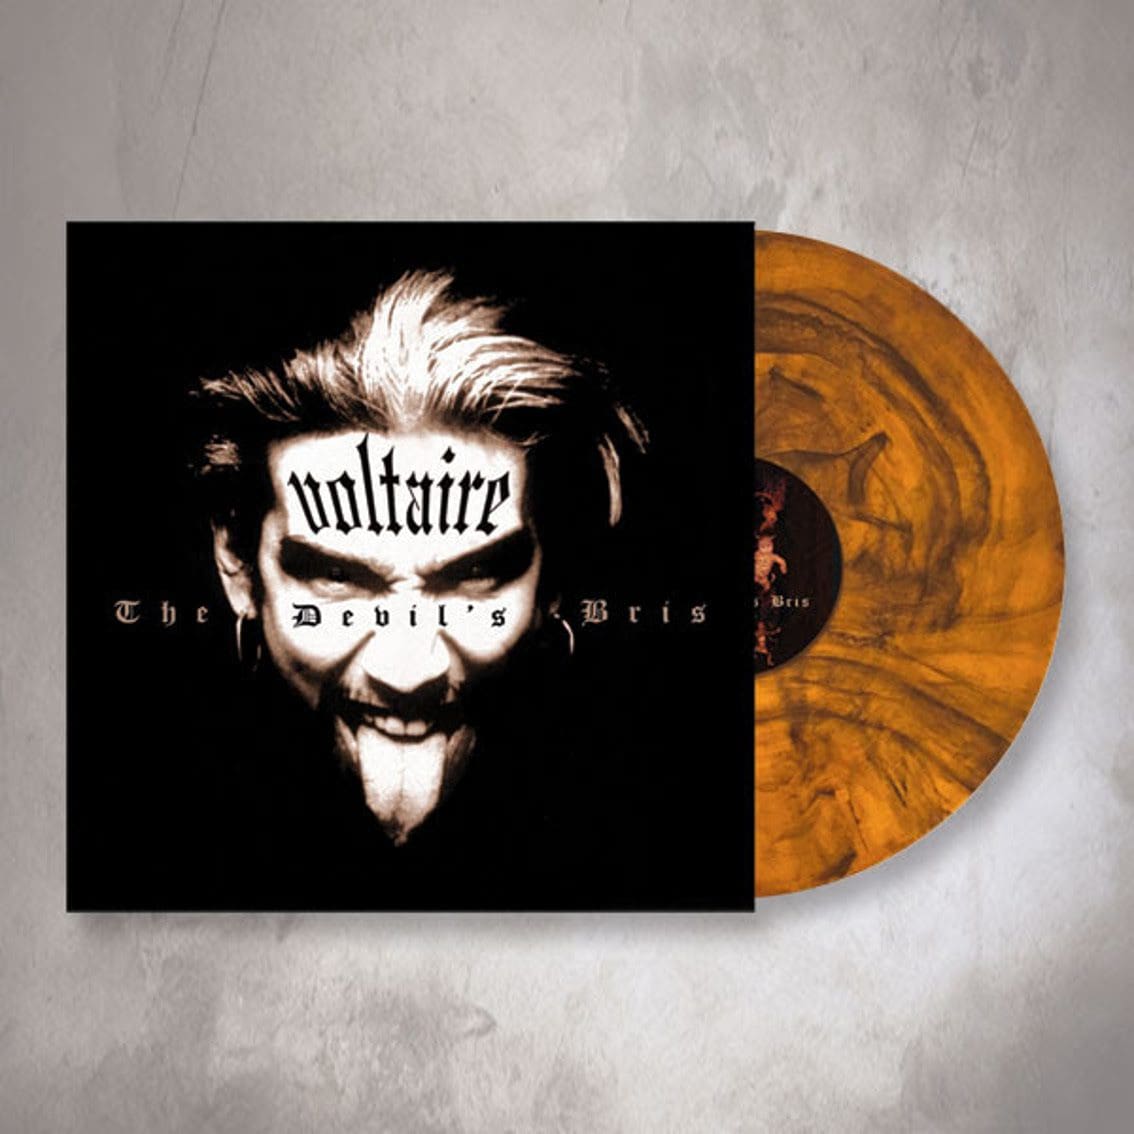 Voltaire reissues 1998 album 'The Devil's Bris' on vinyl